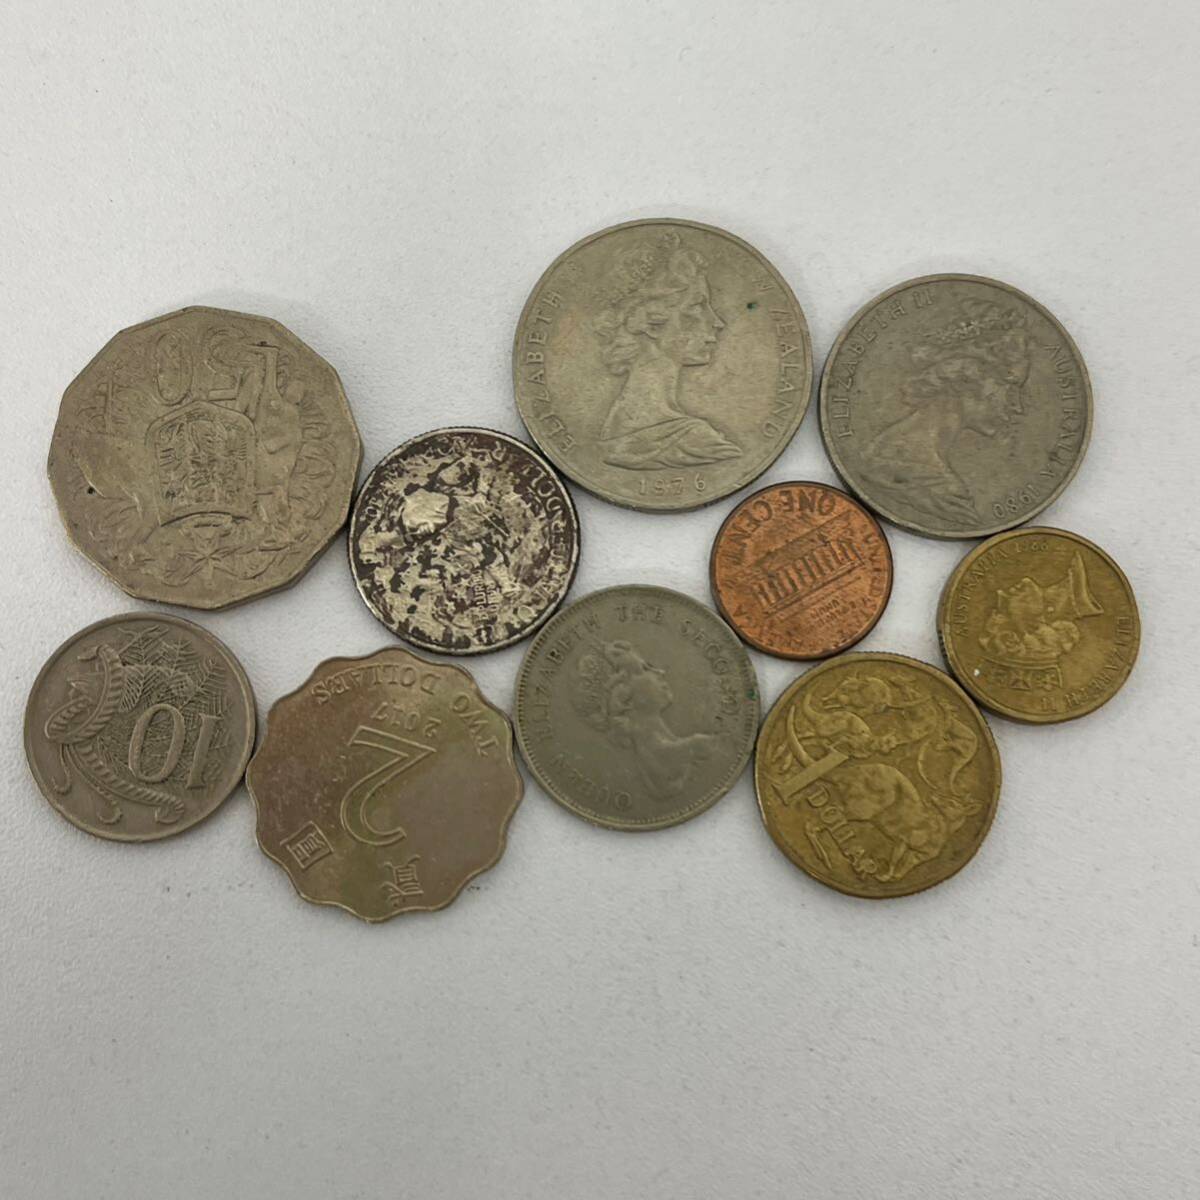 【TN0327】海外 コイン 貨幣 通貨 硬貨 コレクション 国外 マカオ 香港 アジア ゴールドカラー シルバーカラー お金 の画像4